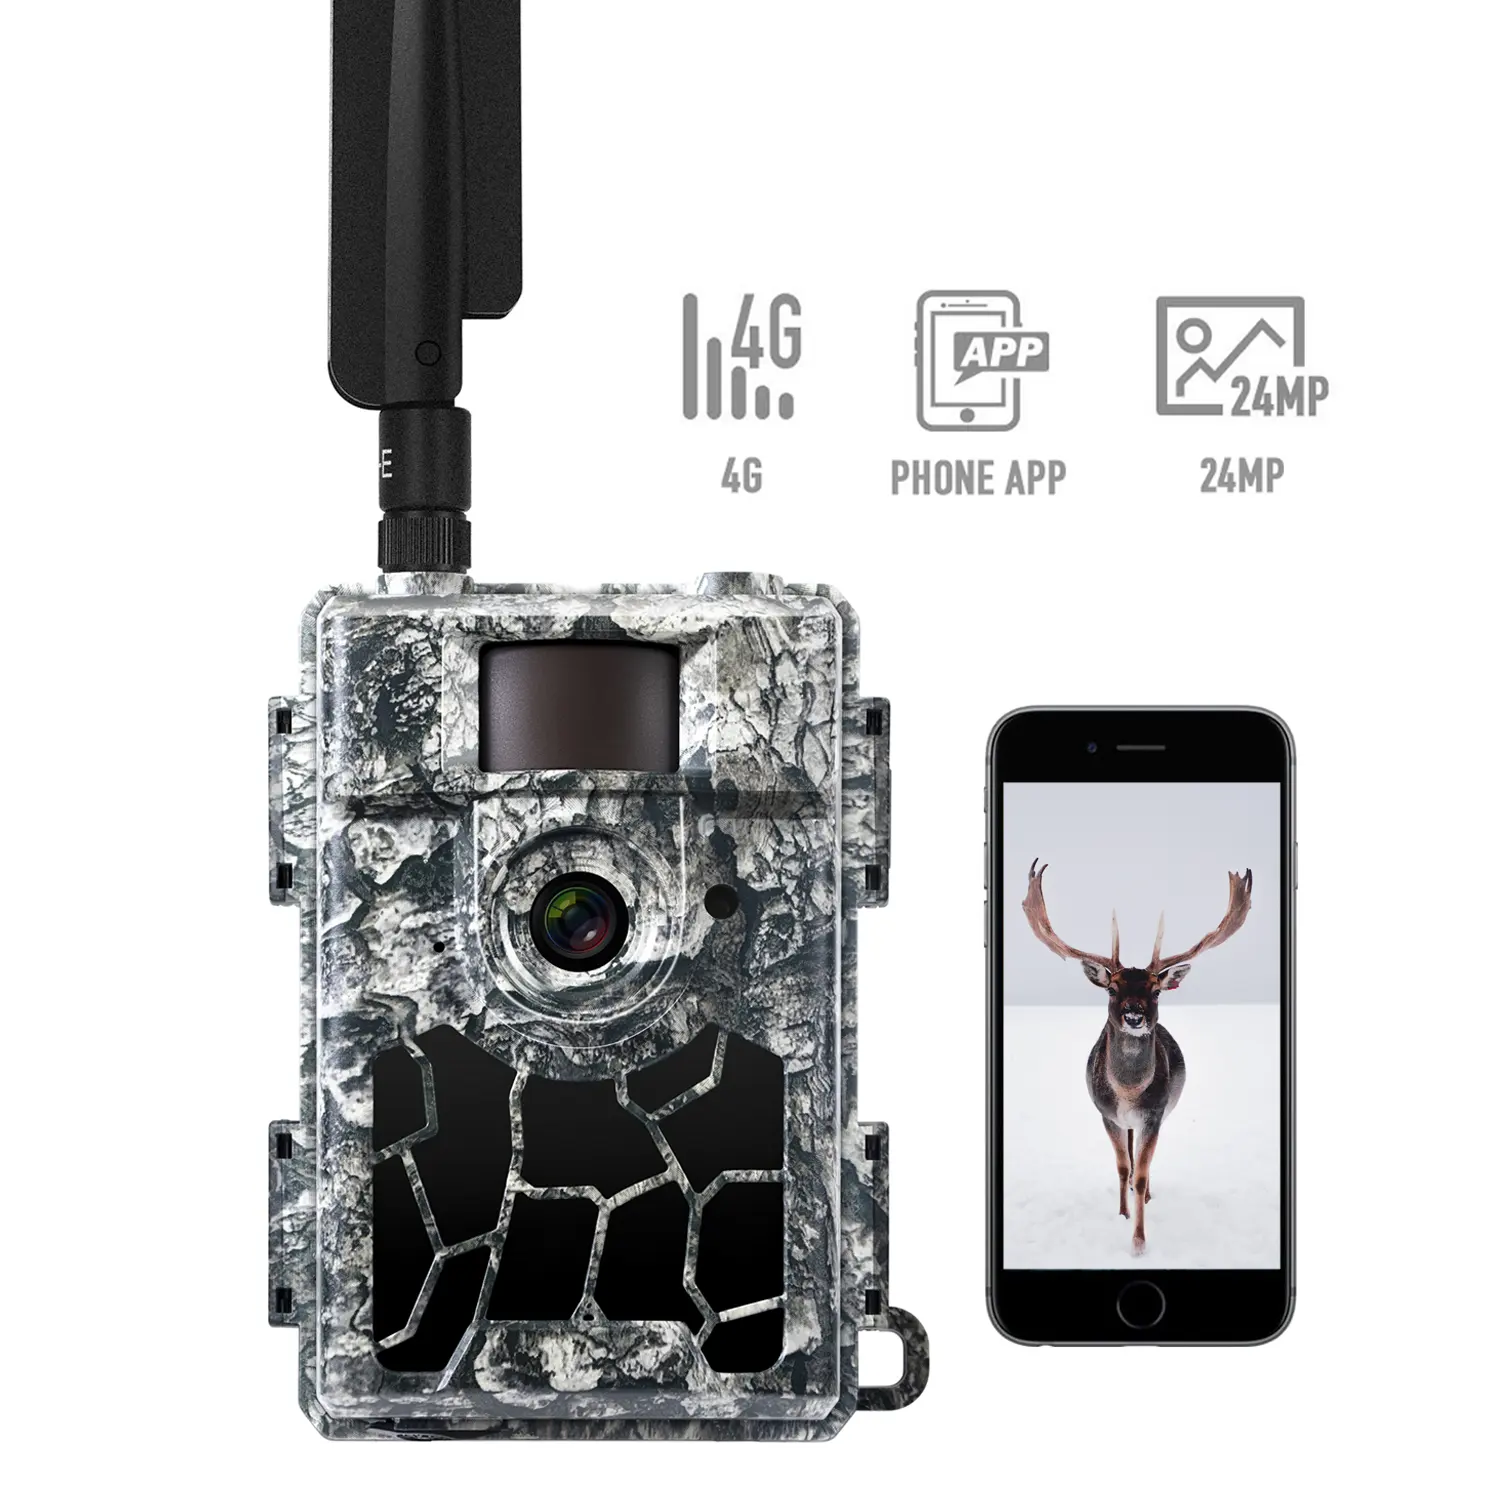 Willfine 5.8cs 4G wildcam lte jagdkamera gps outdoor game camera hunting trail camera